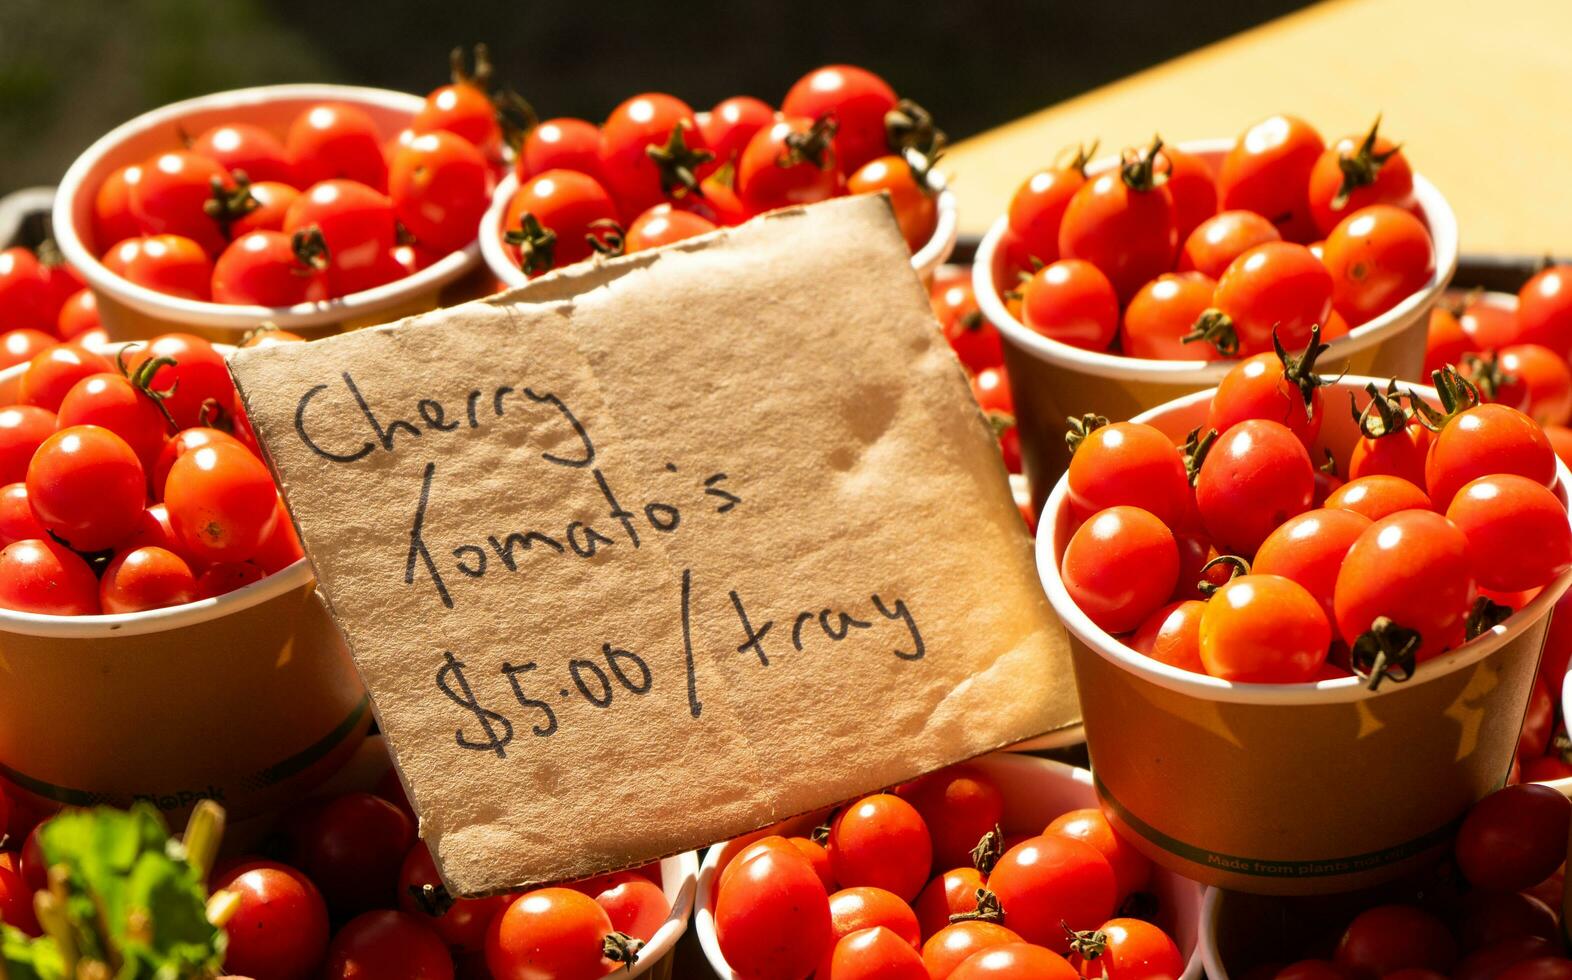 kers tomaten in markt foto